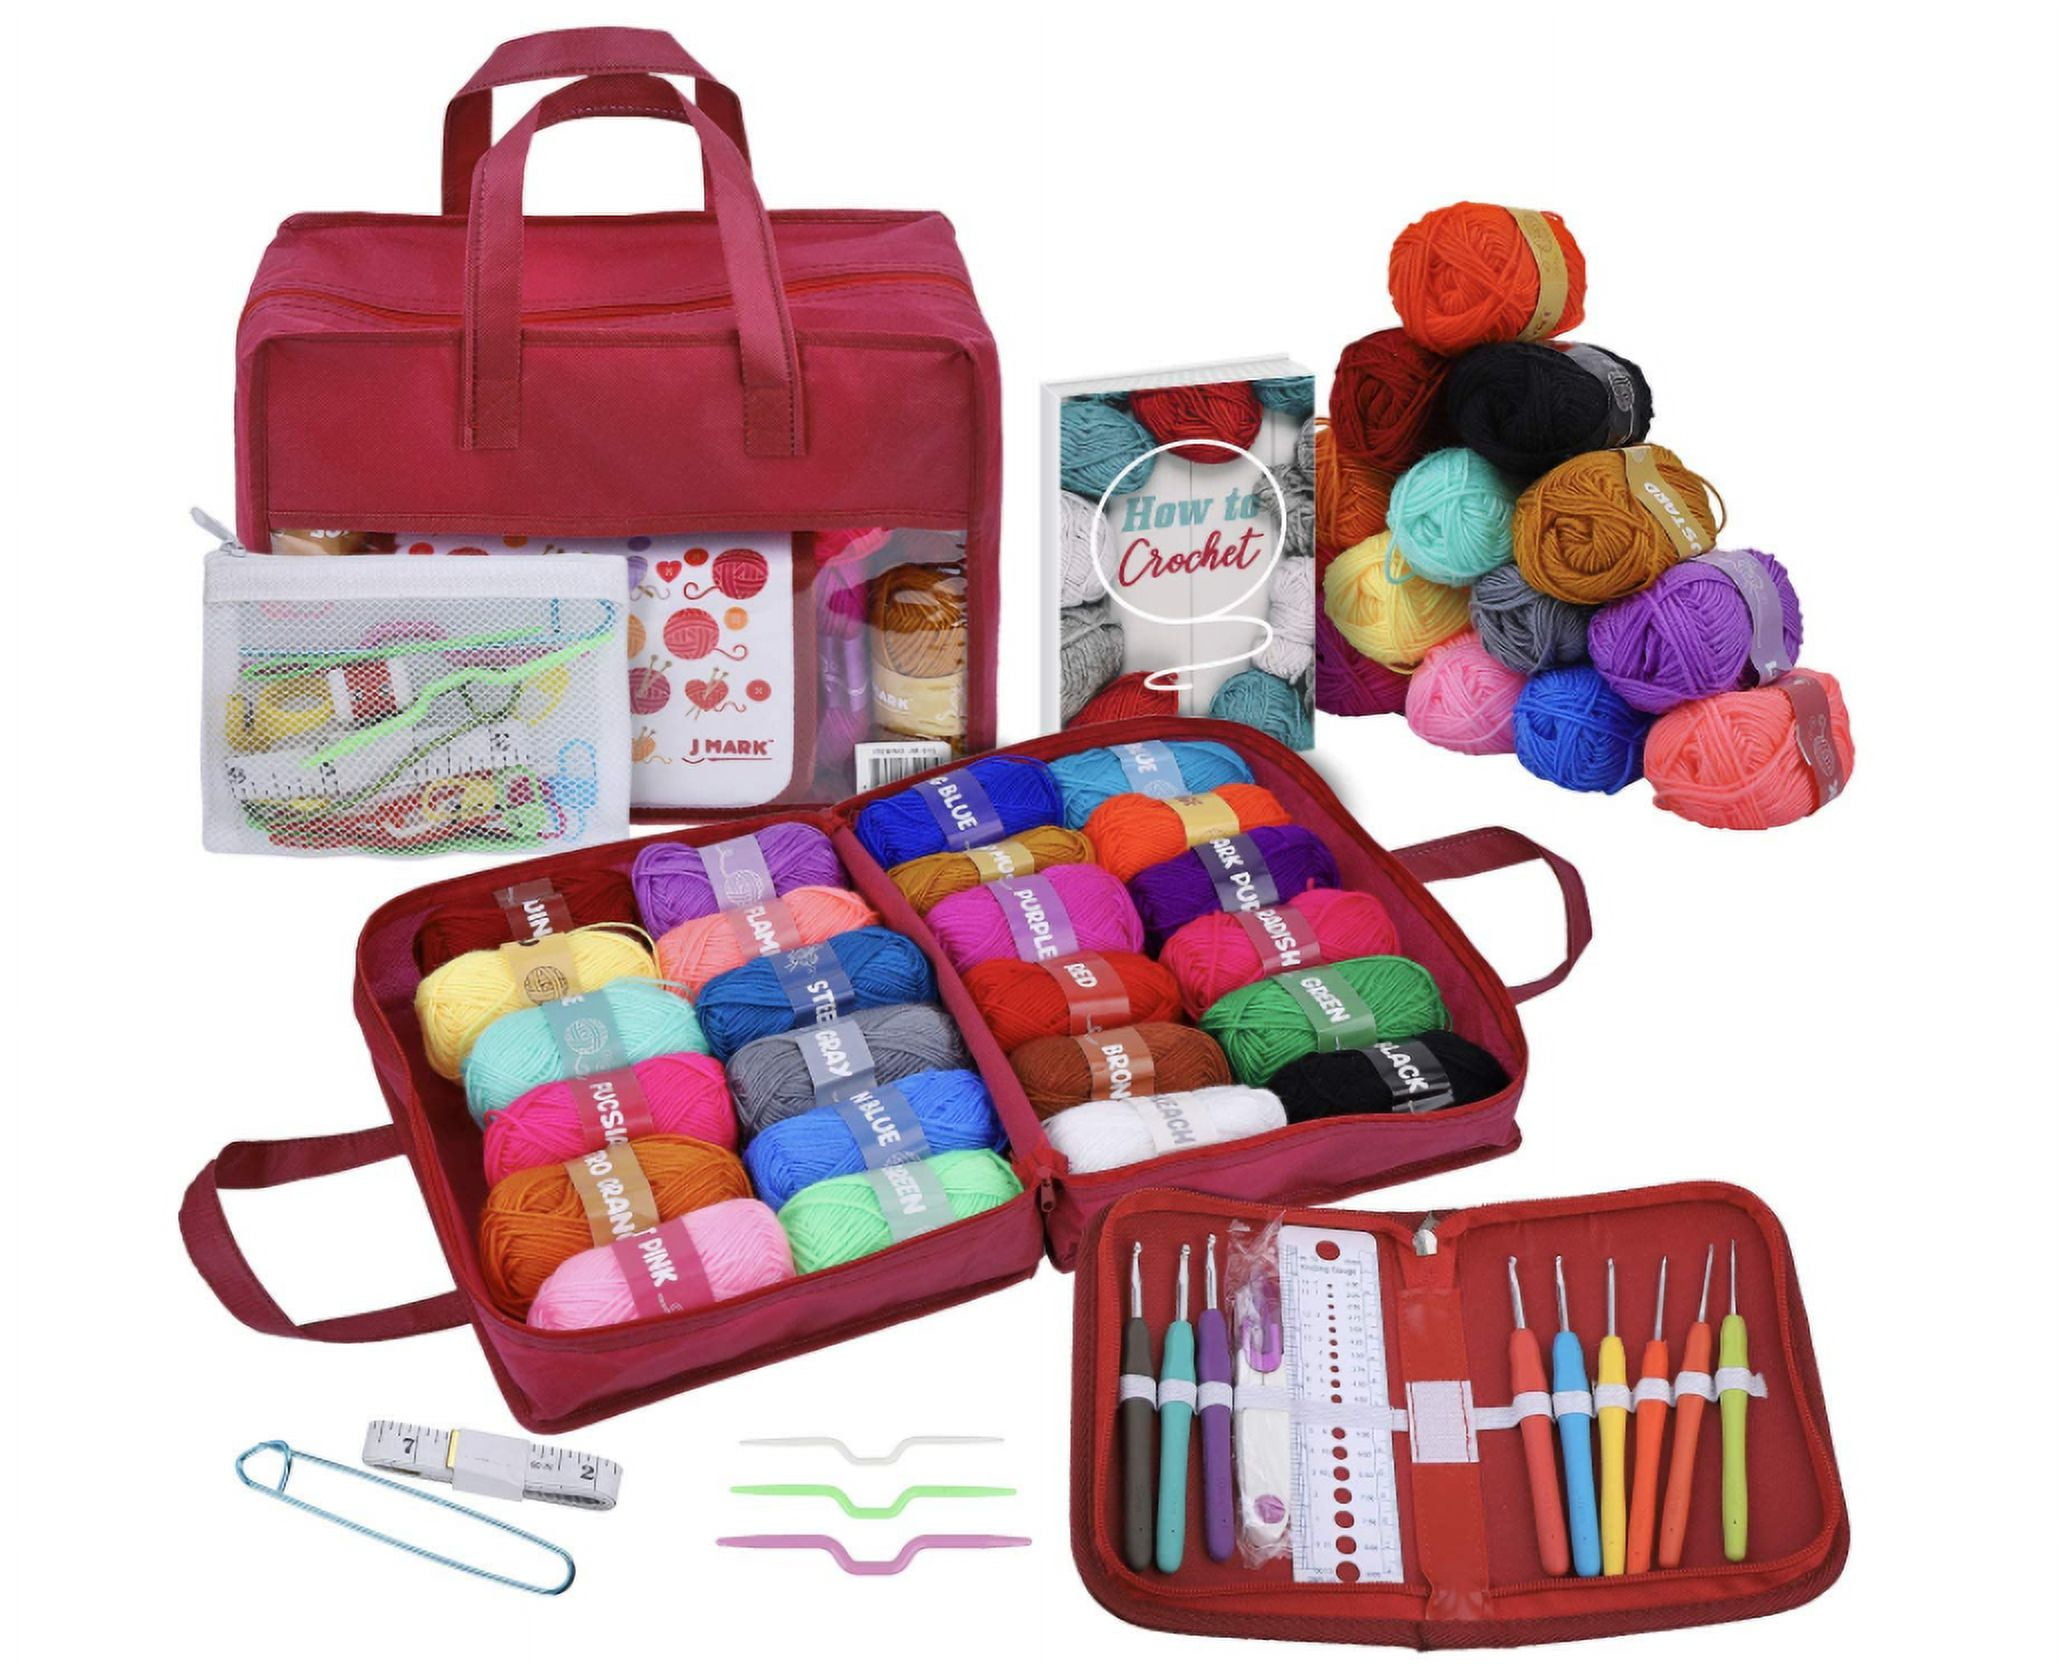 J MARK Crochet Kit for Beginners – Complete Crocheting Set with